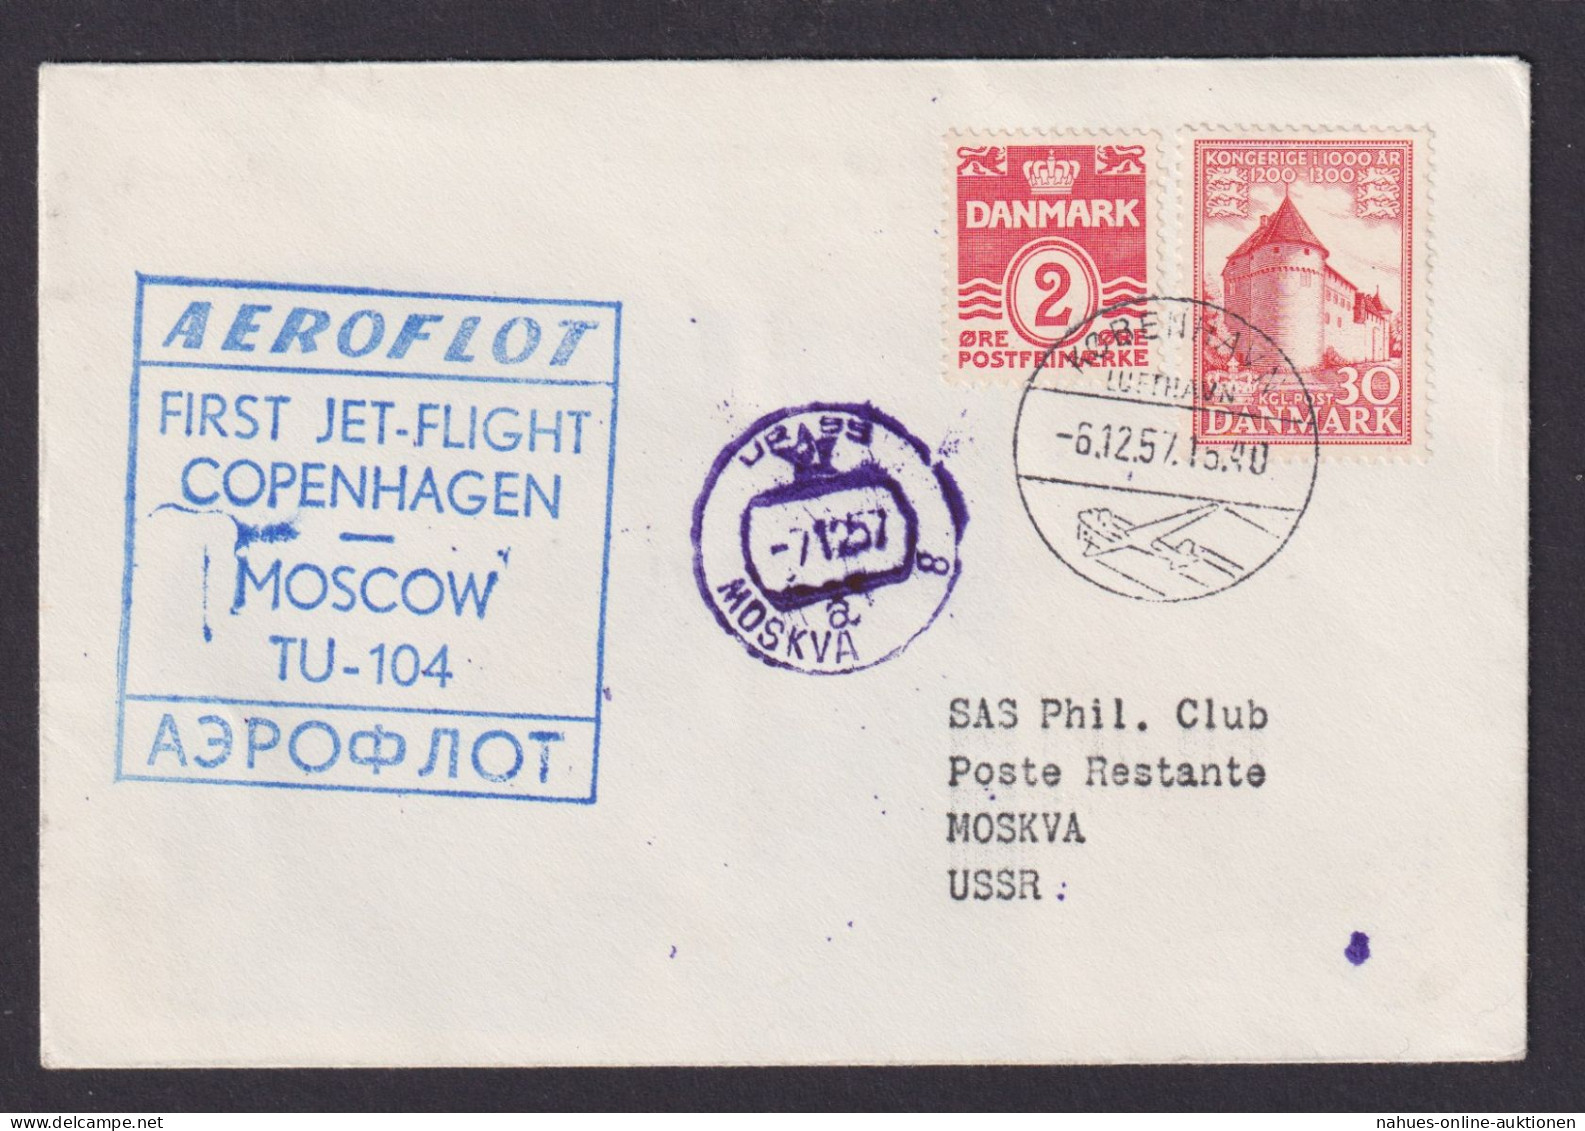 Flugpost Brief Air Mail Dänemark Aeroflot Kopenhagen Moskau Sowjetunion 6.12.57 - Covers & Documents